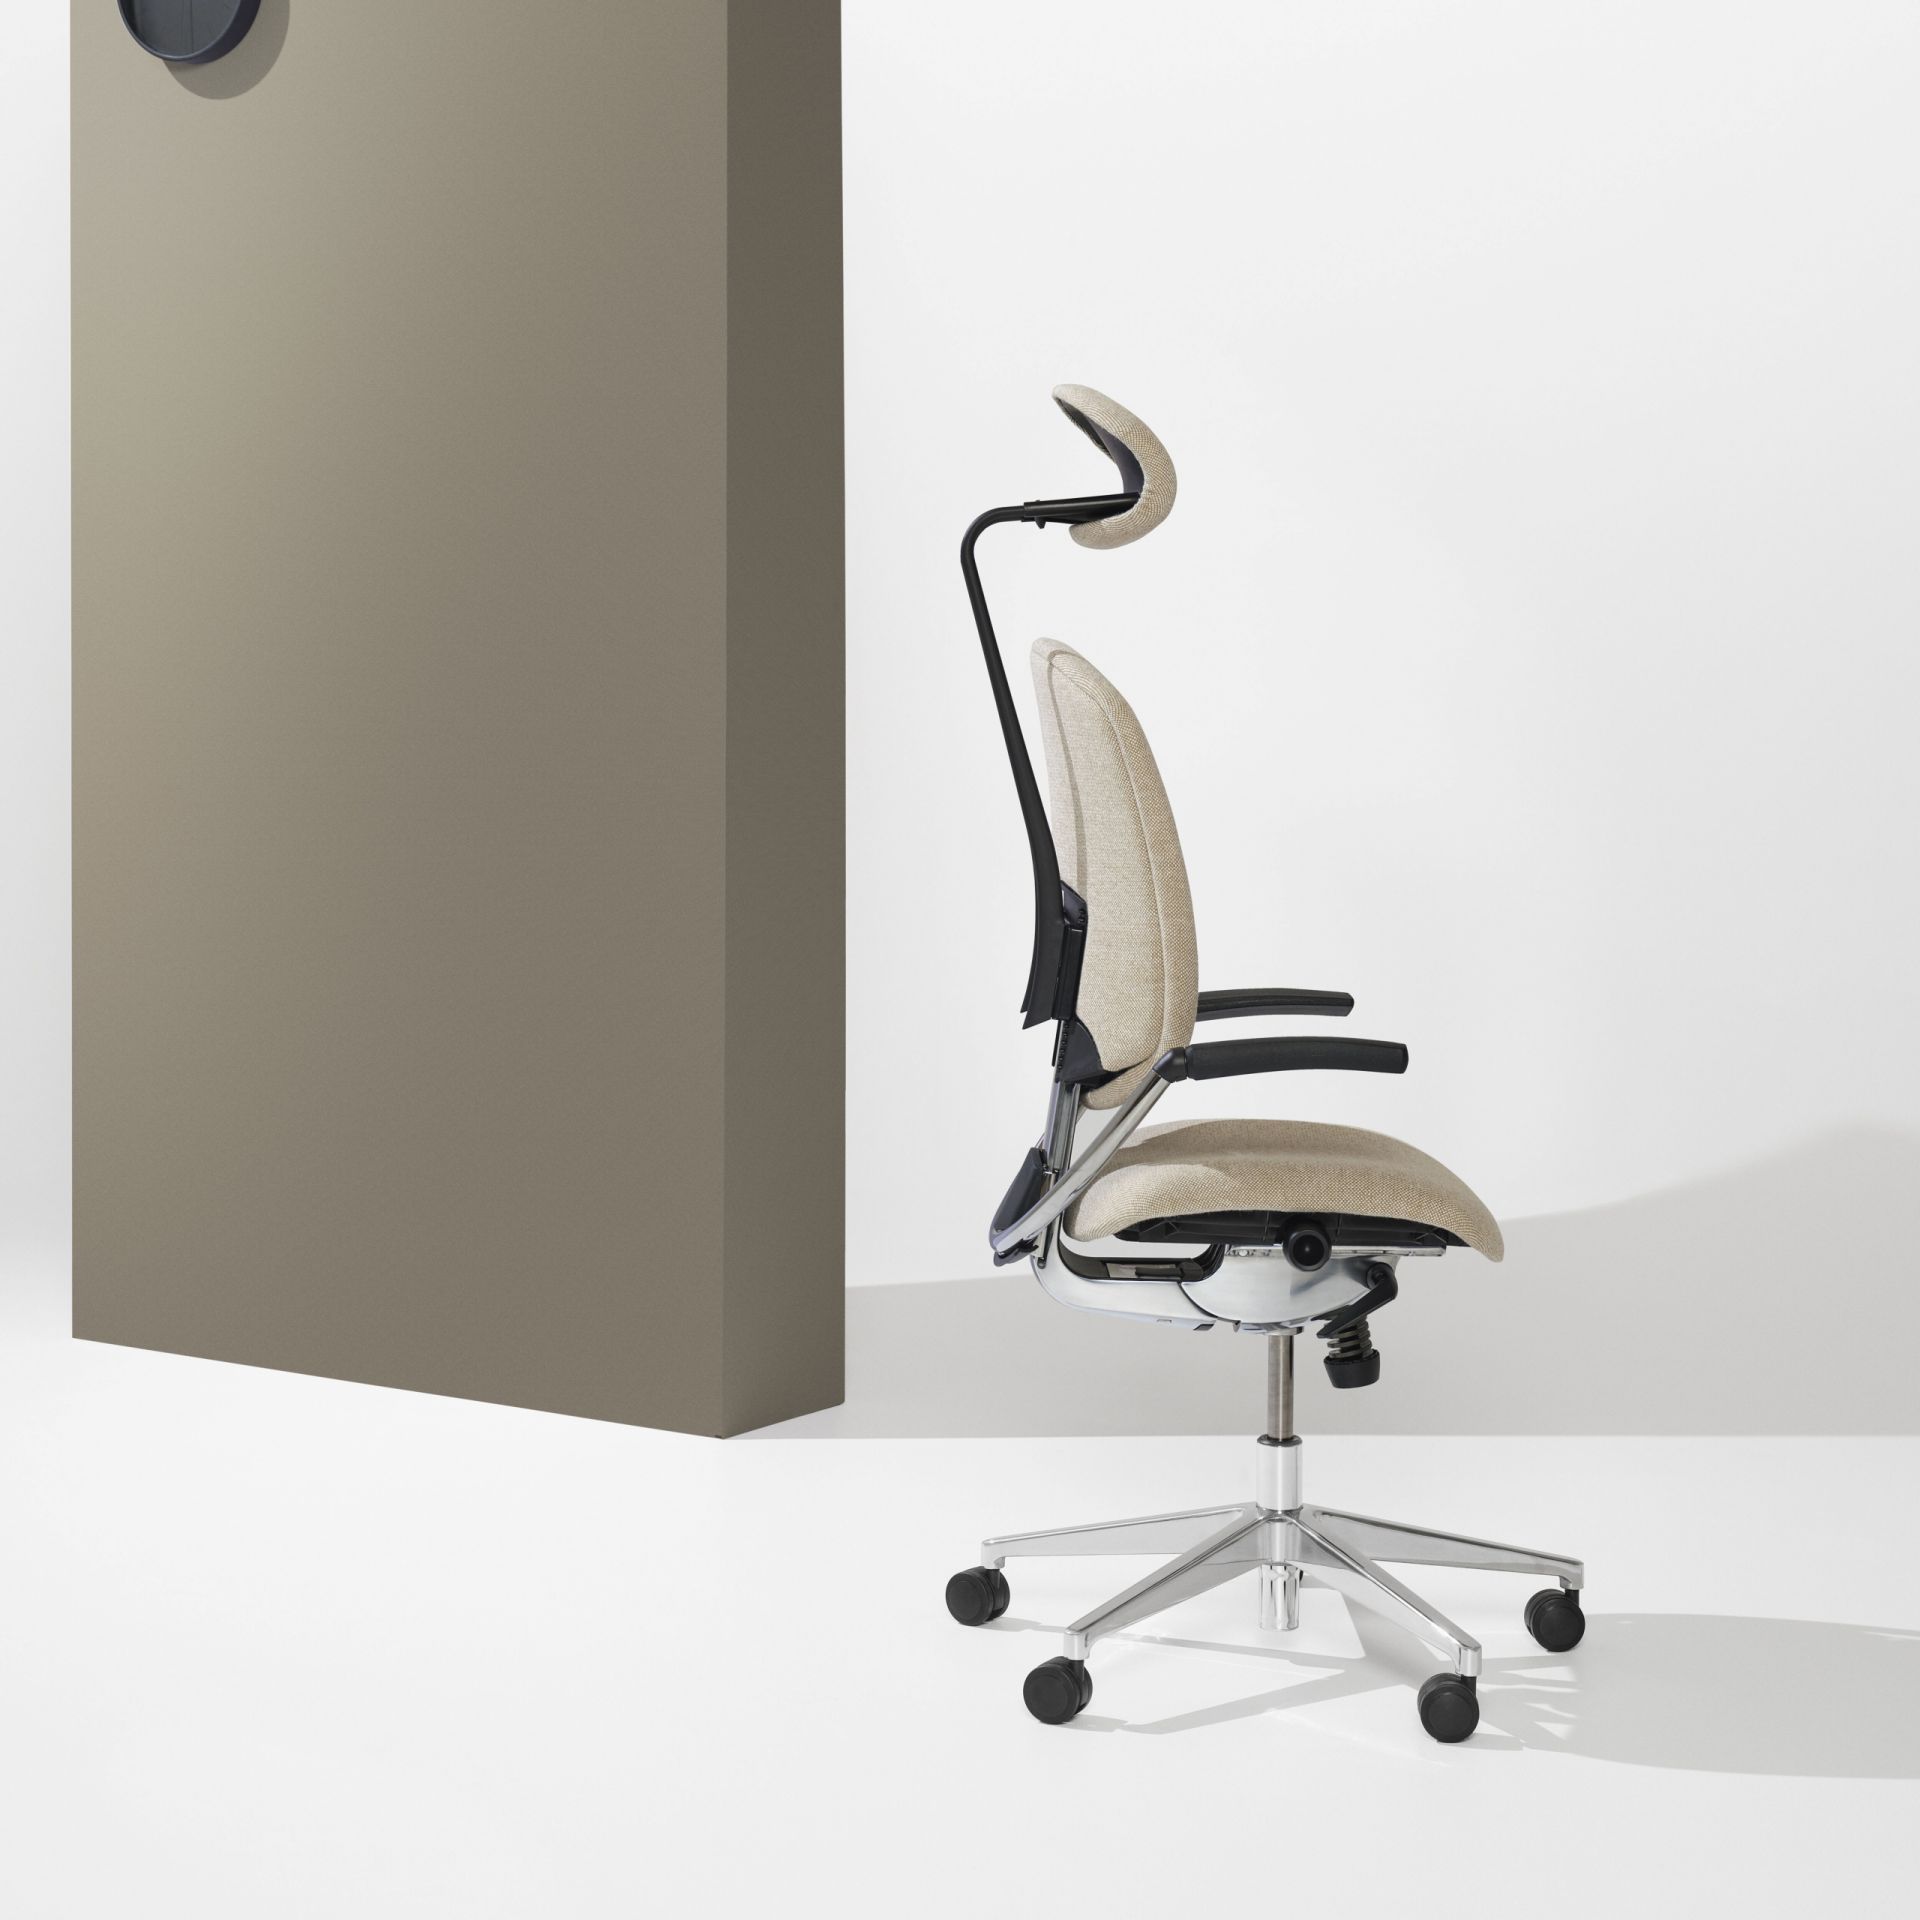 Savo Maxikon Maxikon workchair product image 2